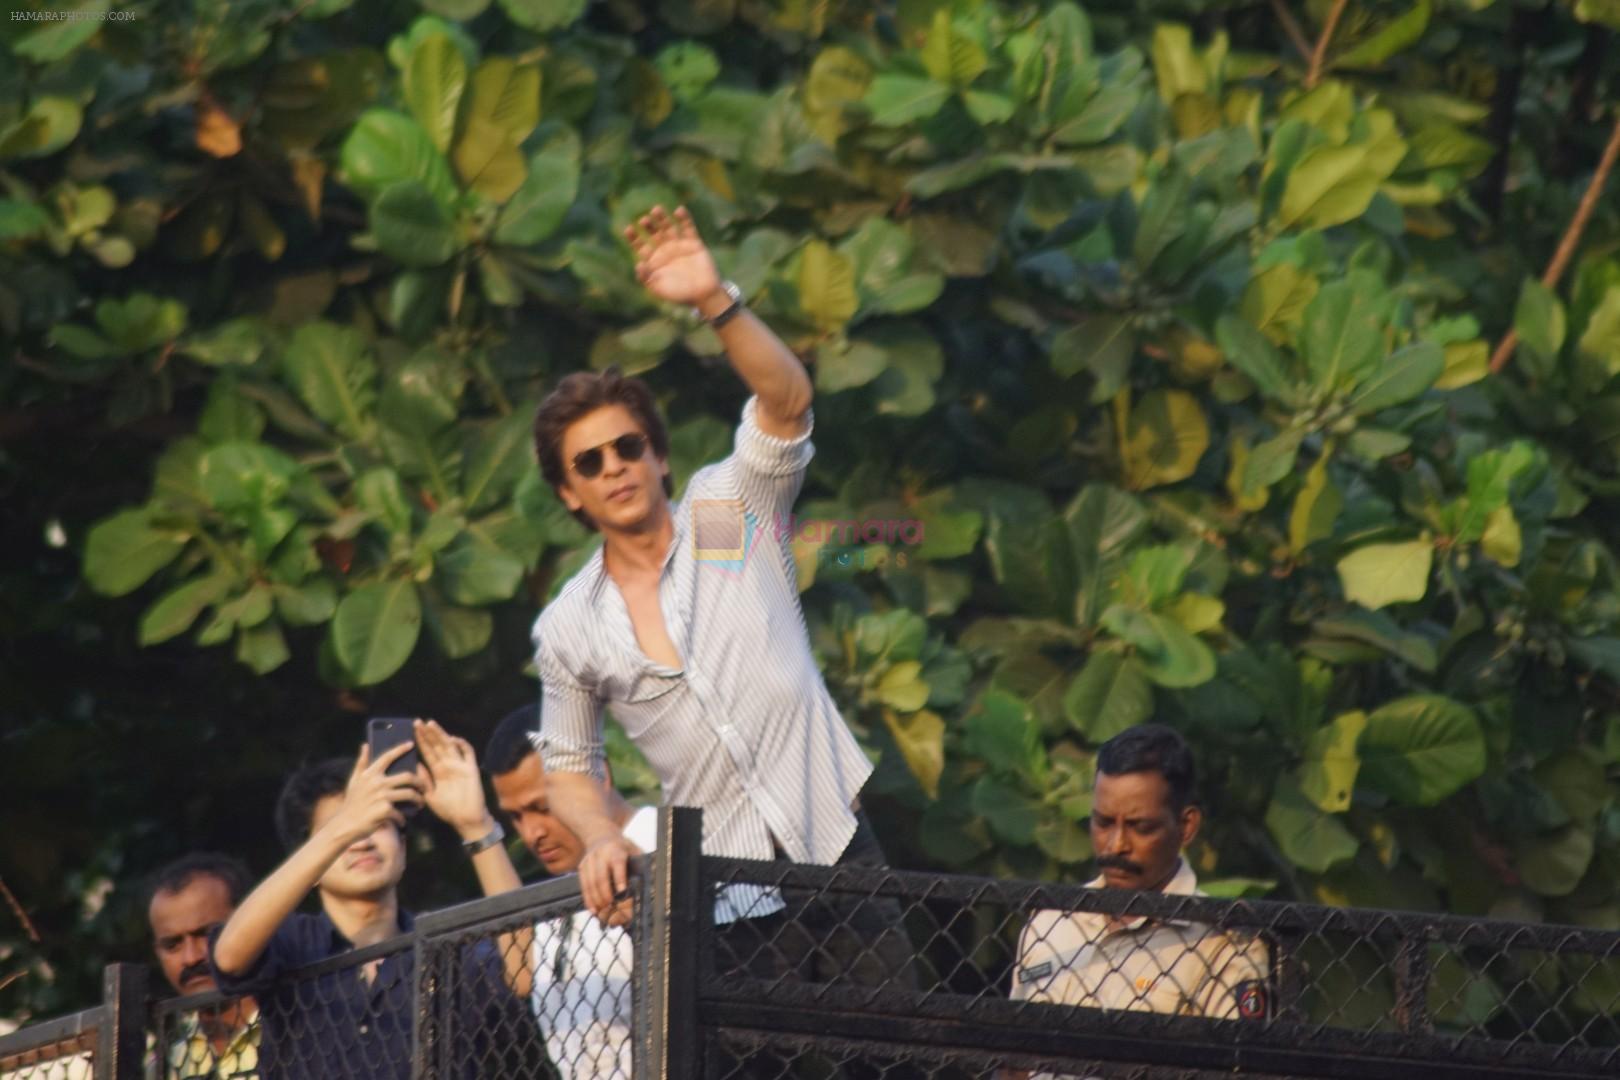 Shah Rukh Khan's 52nd Birthday Celebration With Fans on 2nd Nov 2017